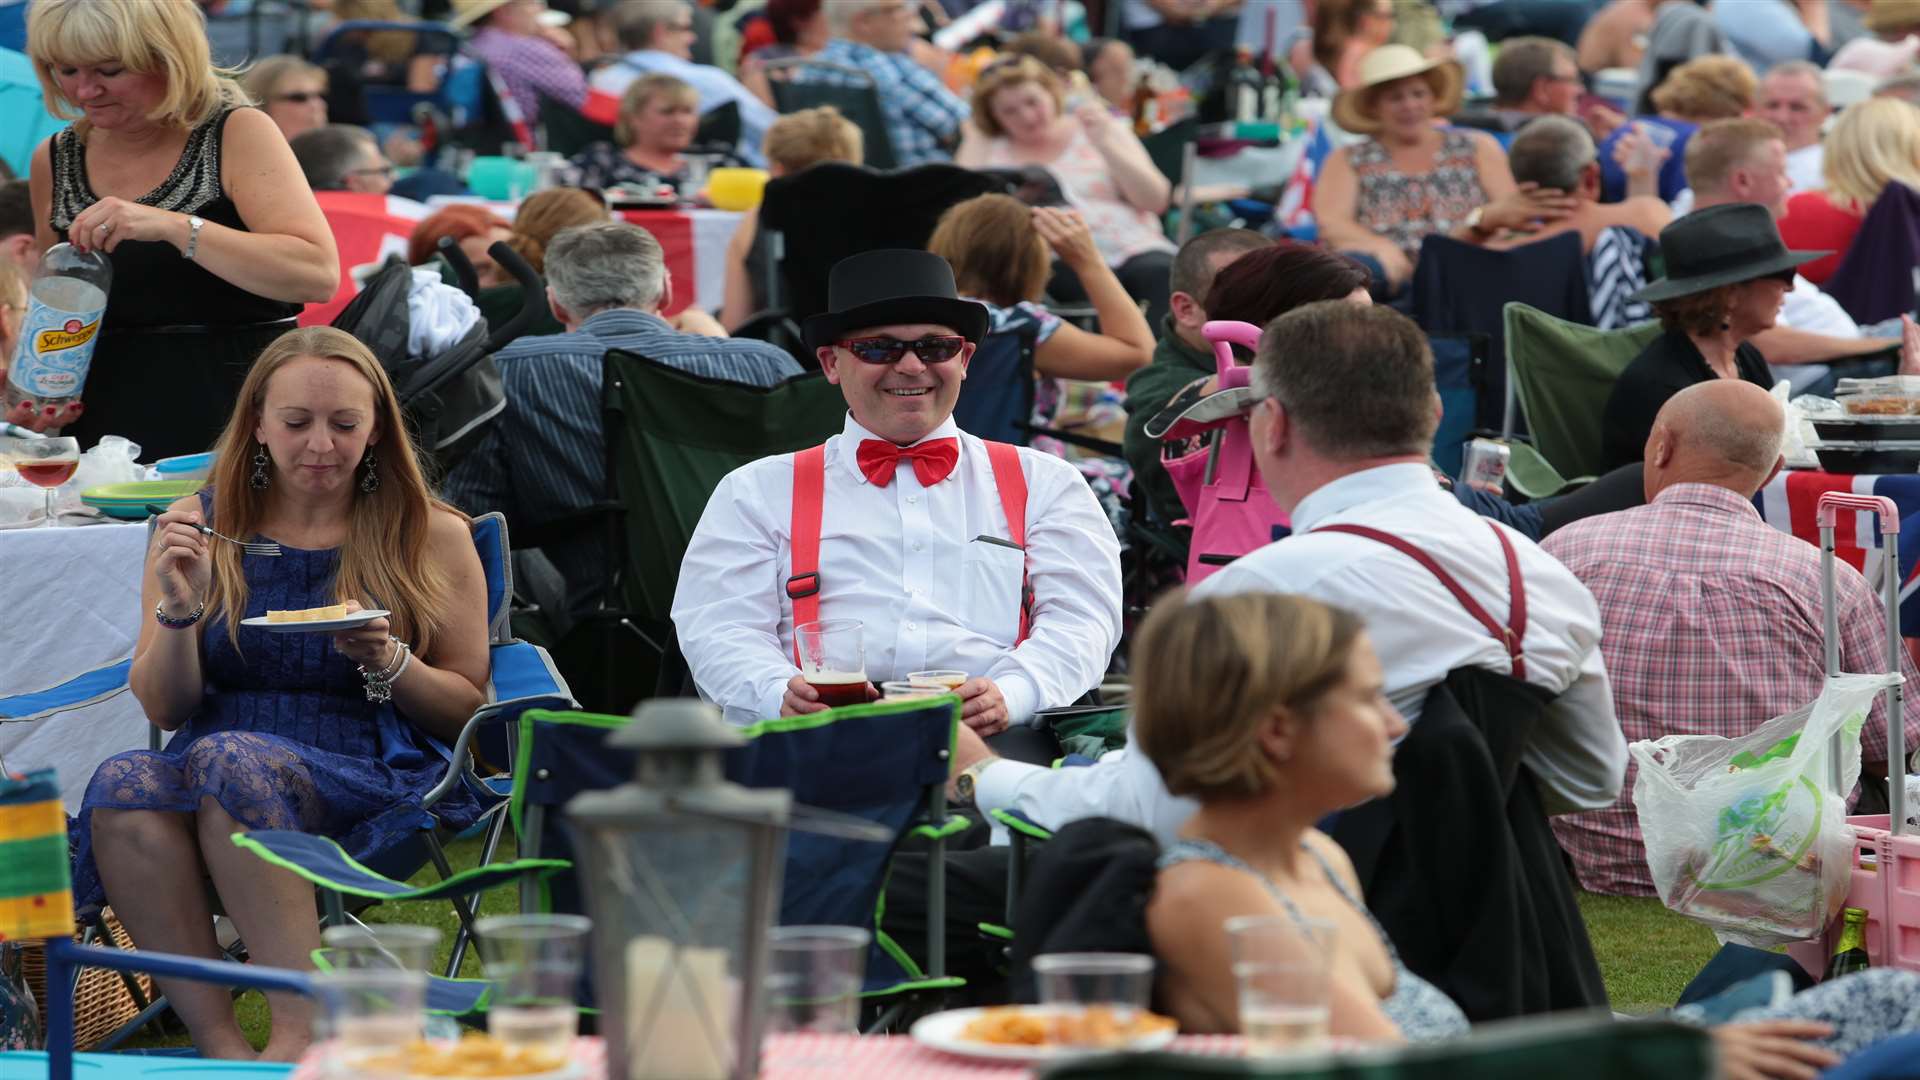 Thousands enjoy the Leeds Castle Classical Concert every summer